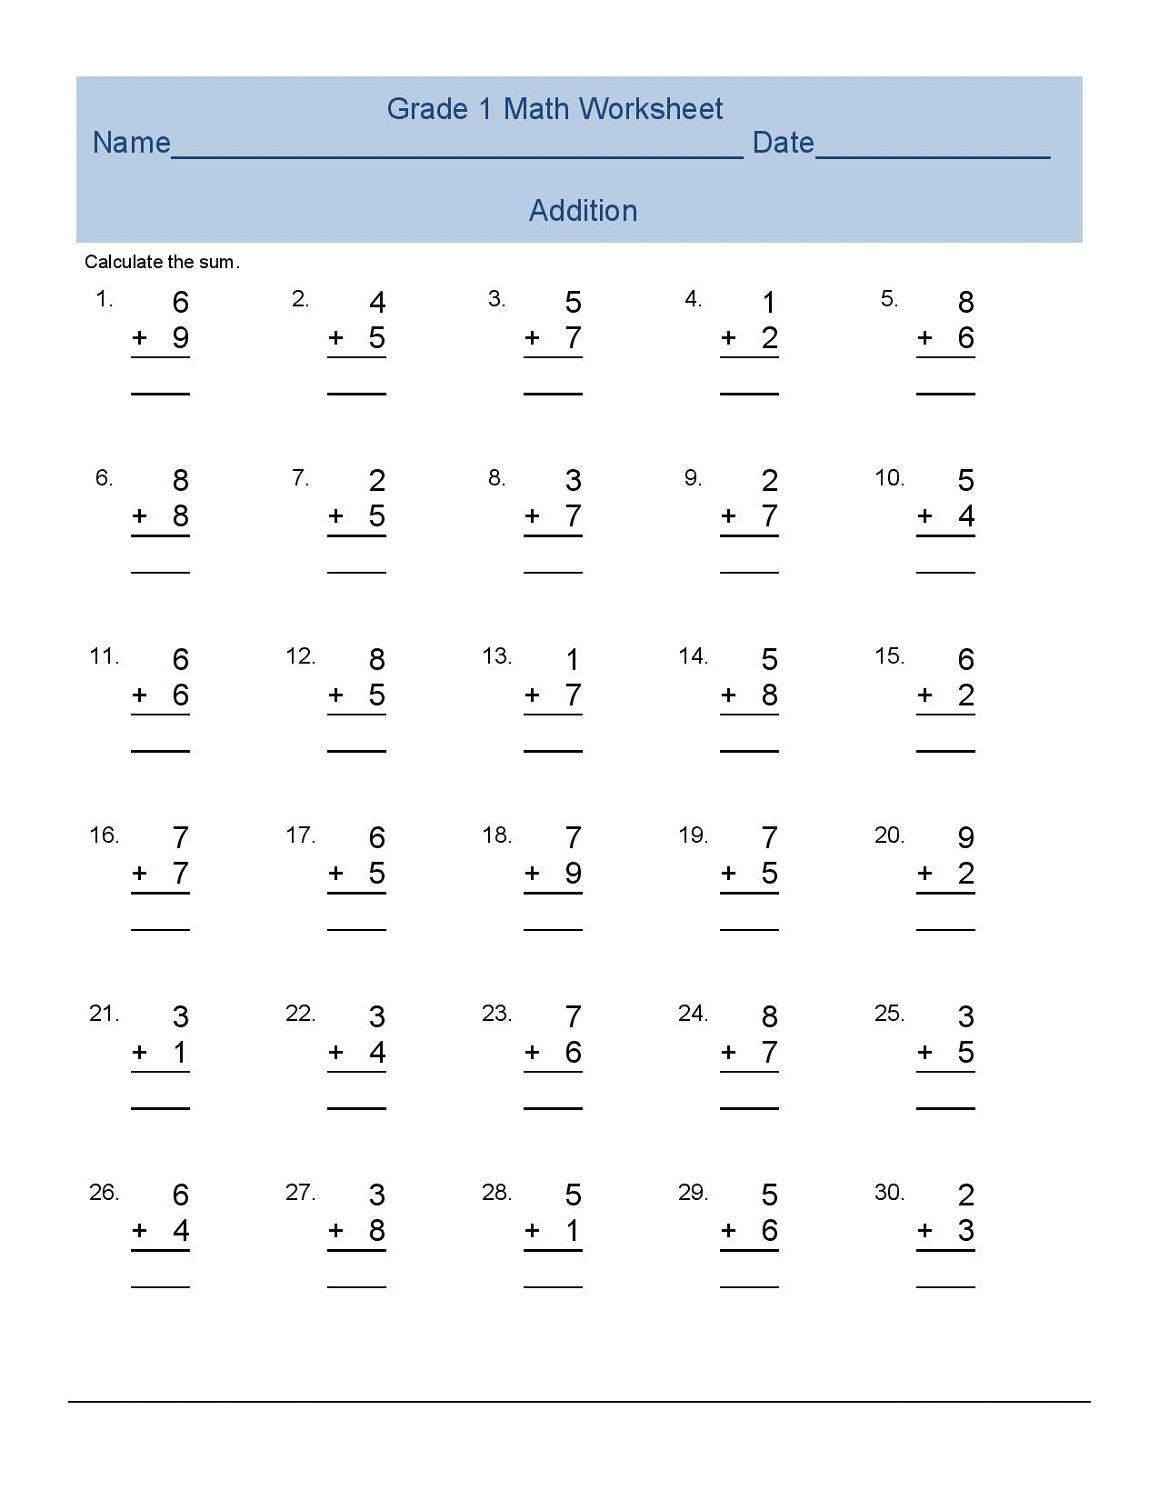 math-worksheets-for-1st-grade-activity-shelter